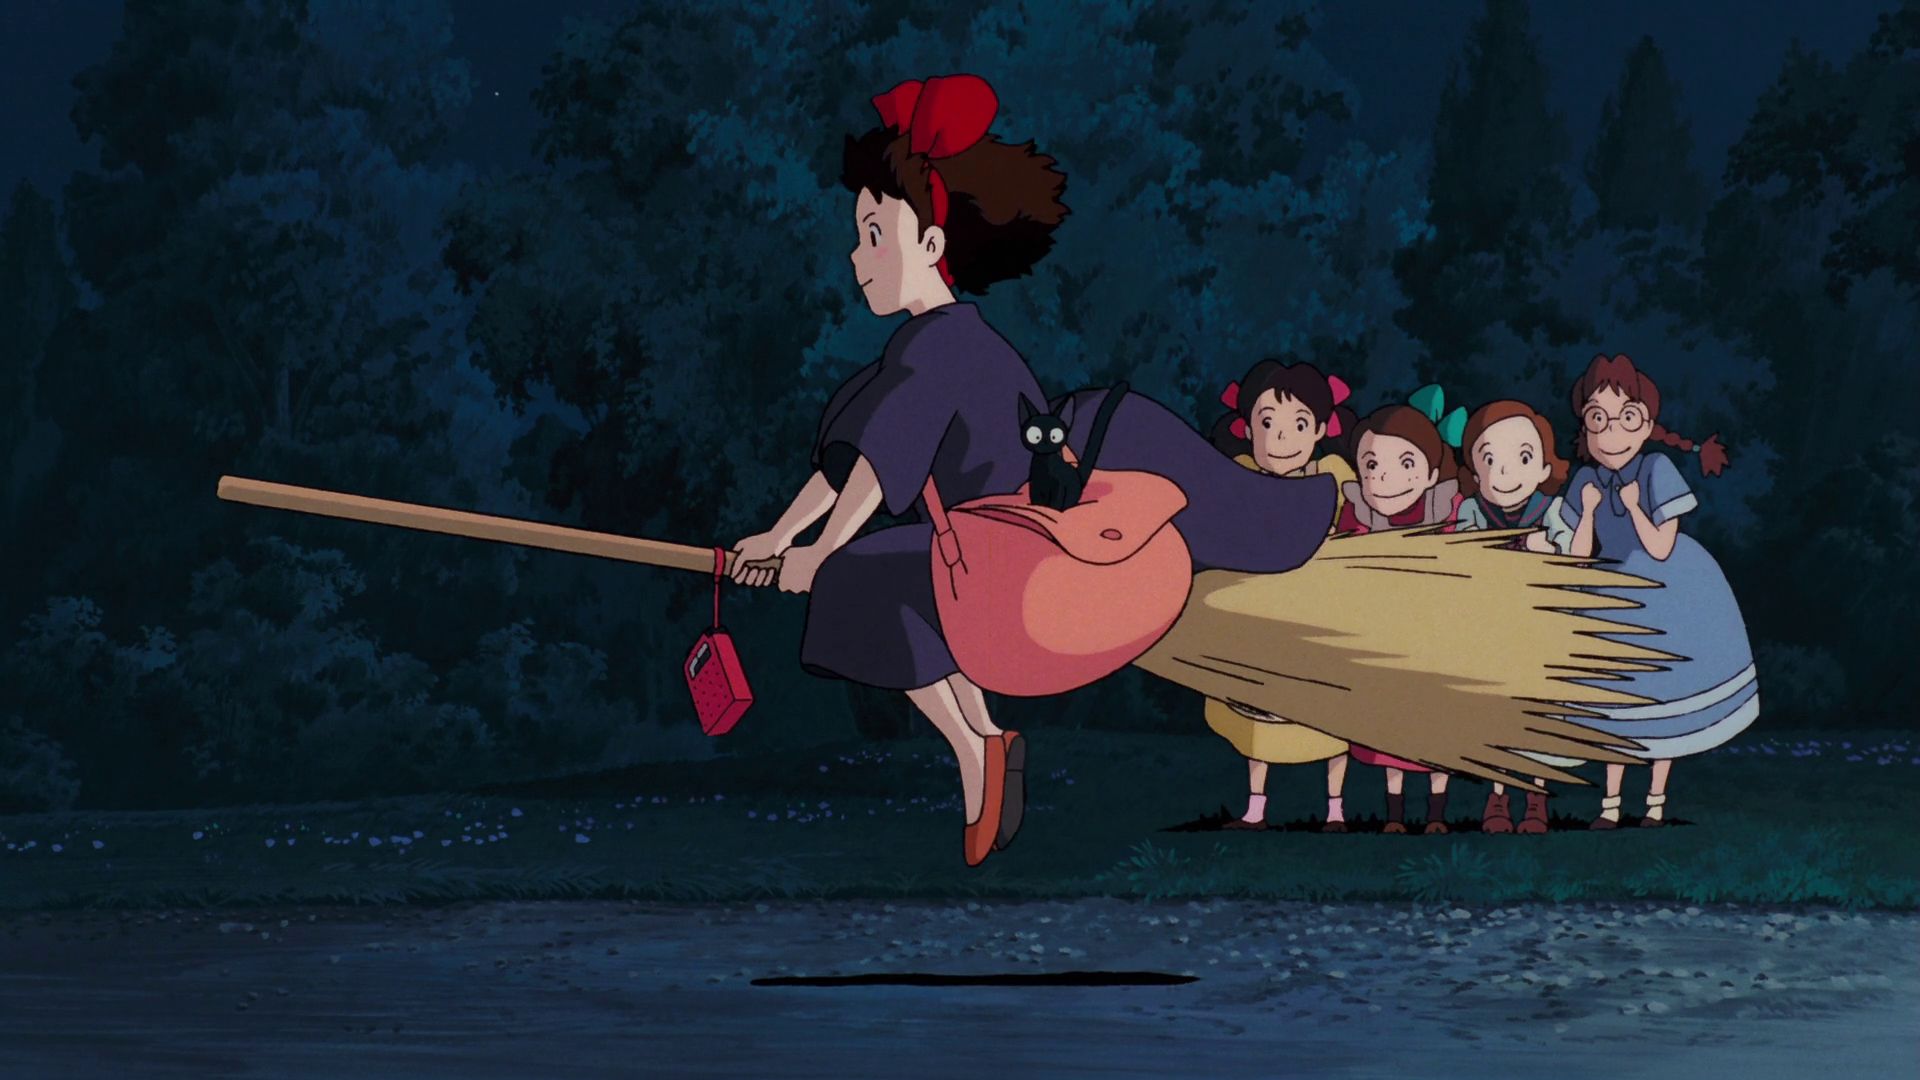 Studio Ghibli Kiki&;s Delivery Service Anime Film Stills 1920x1080 UHD Wallpaper. Walldump HD and UHD Wallpaper